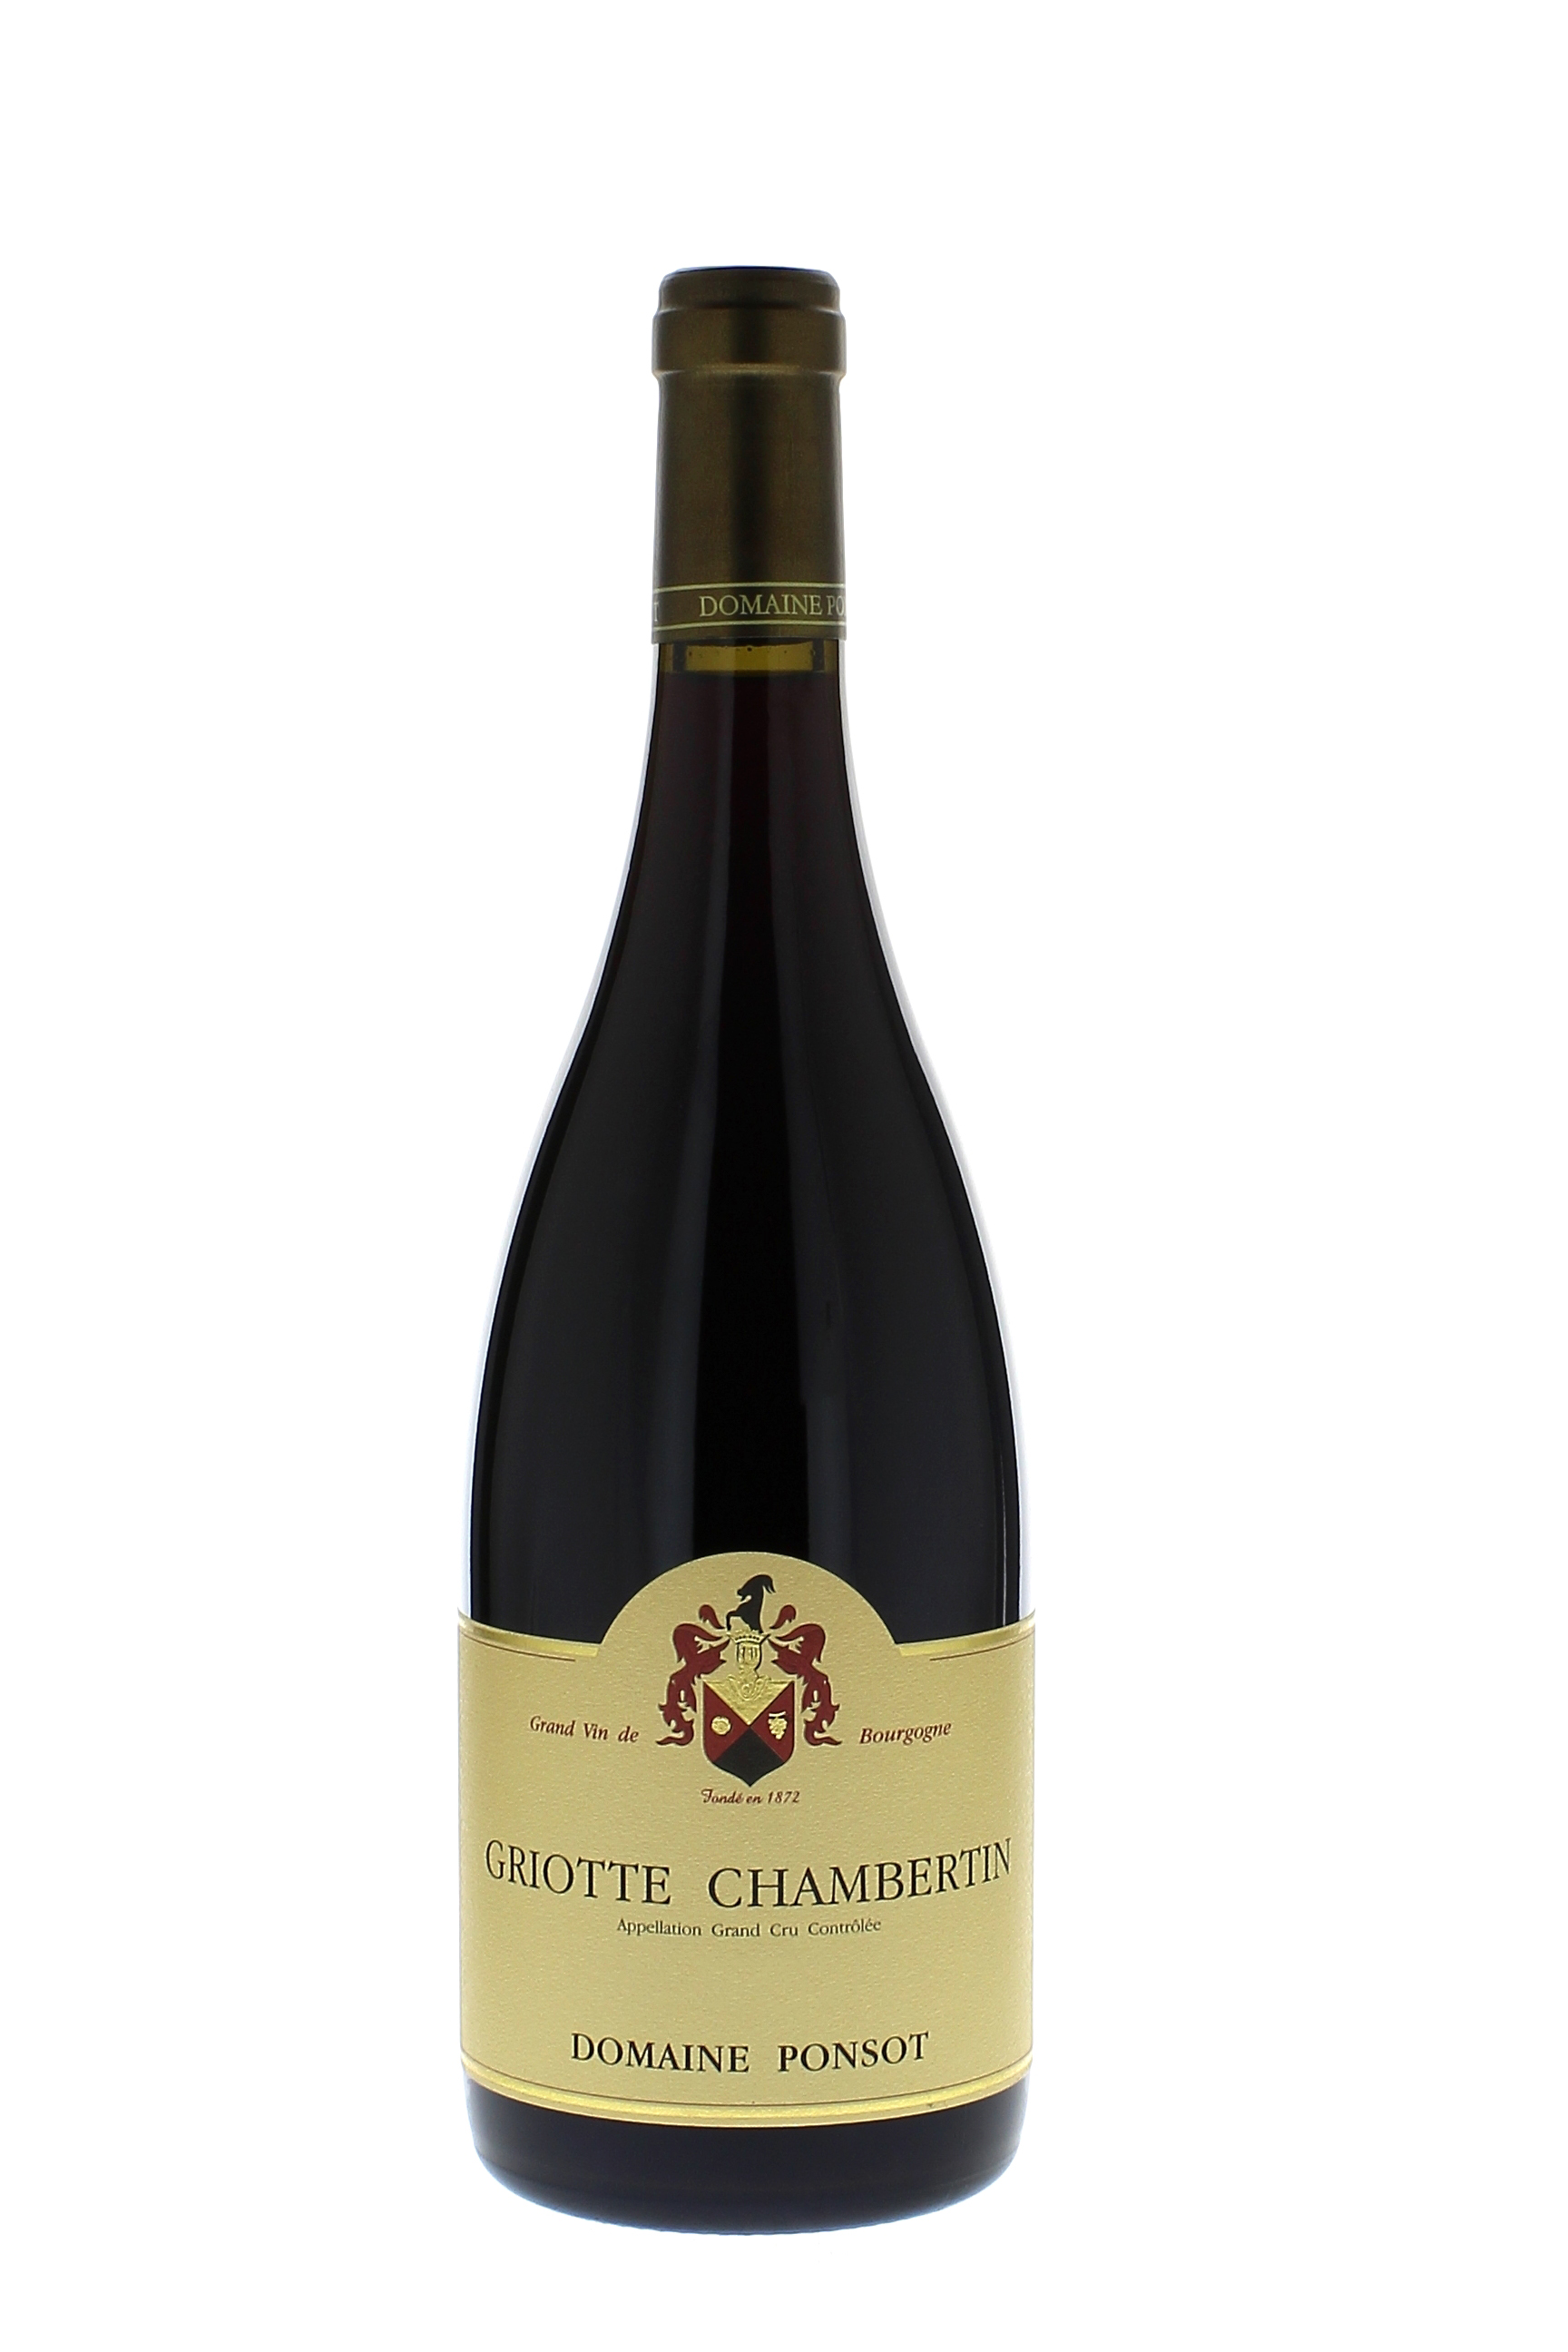 Griotte chambertin grand cru 2013 Domaine PONSOT, Bourgogne rouge